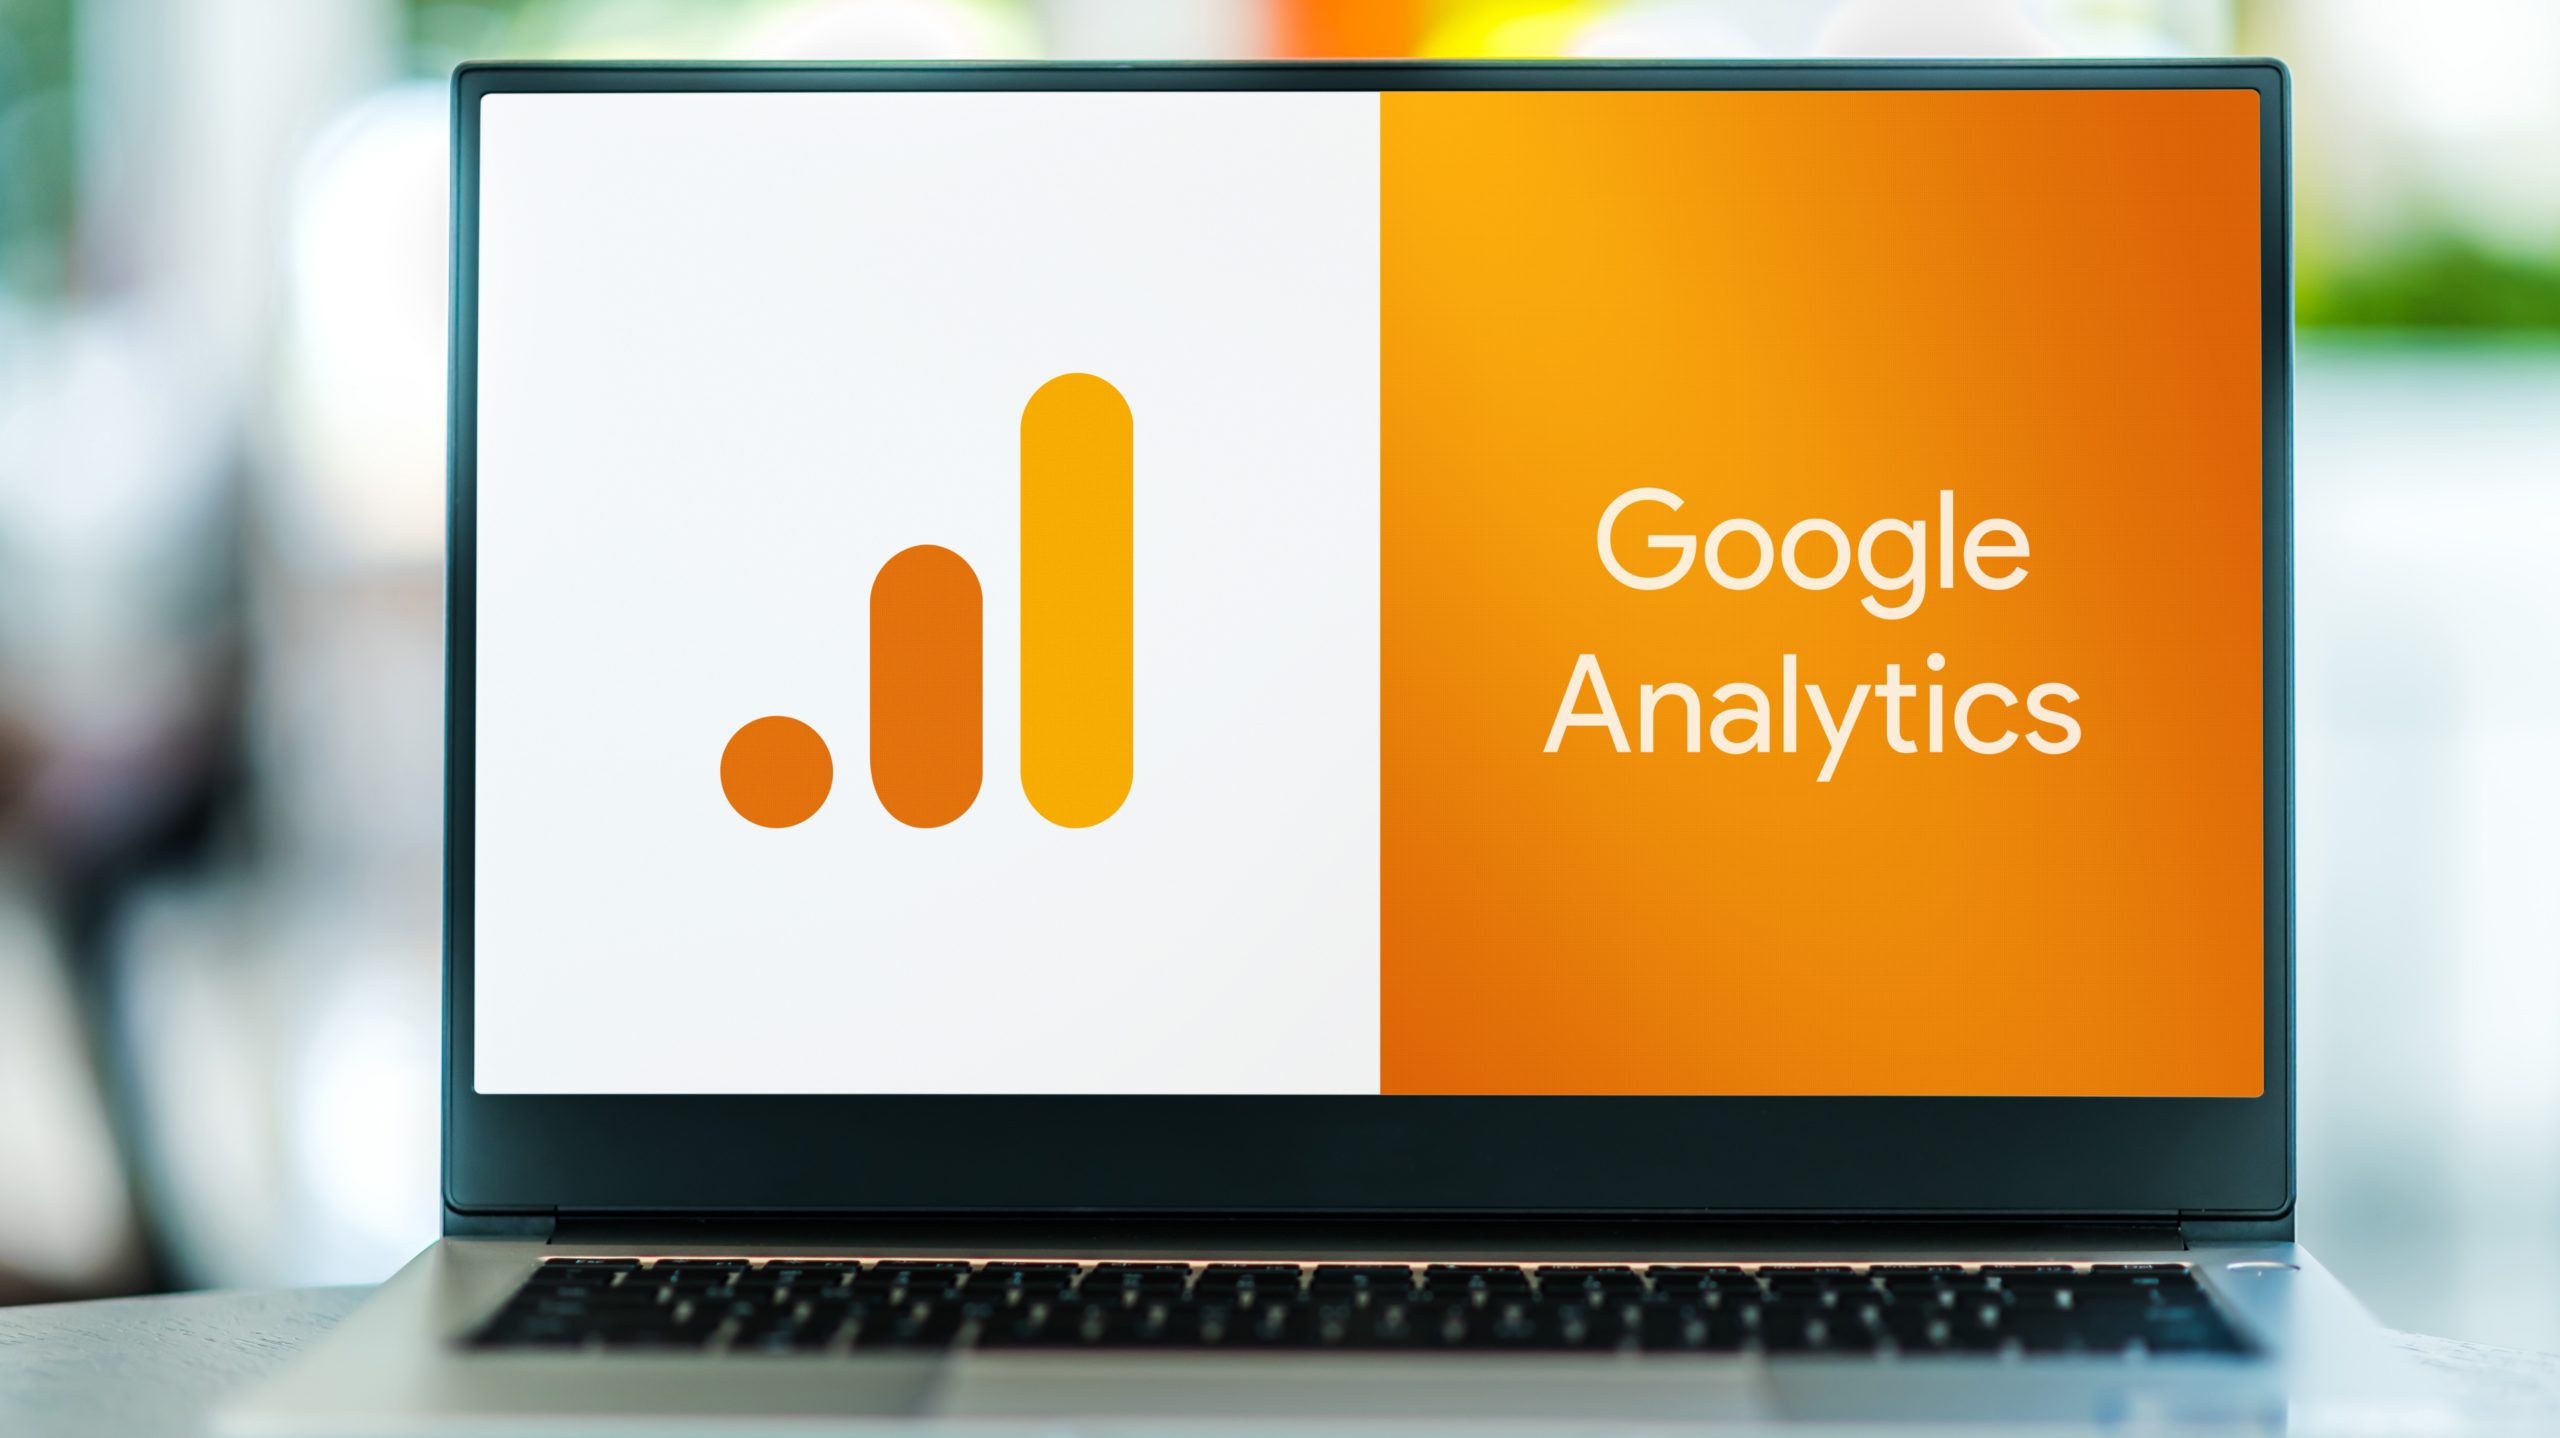 Google Analytics 4 remplacera Universal Analytics d’ici l’été 2023